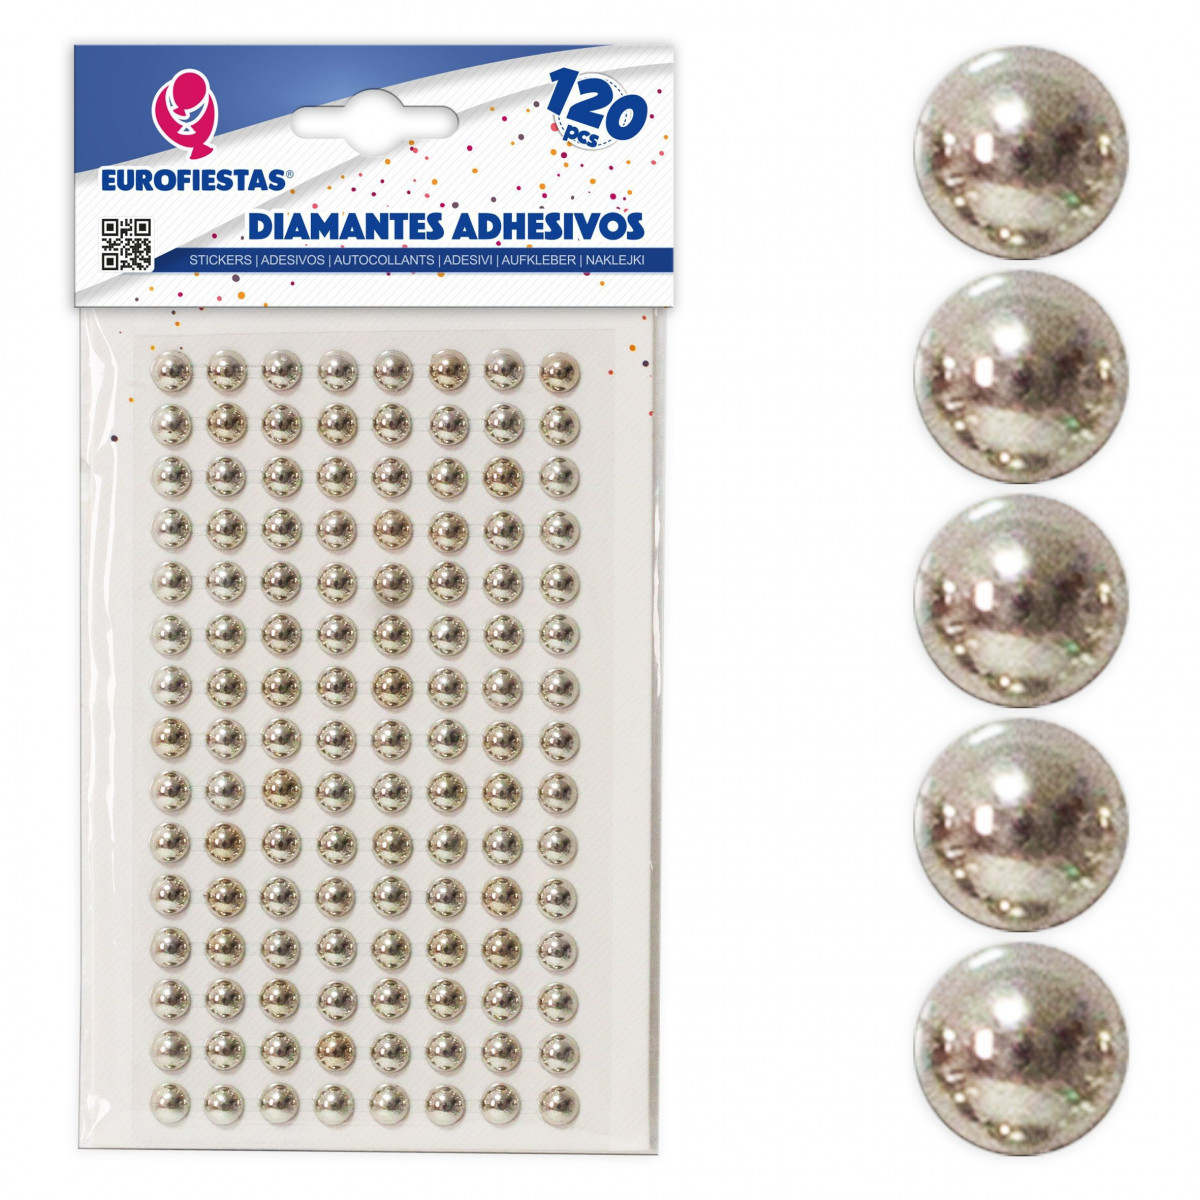 120 diamantes adhesivos gr plata chapado